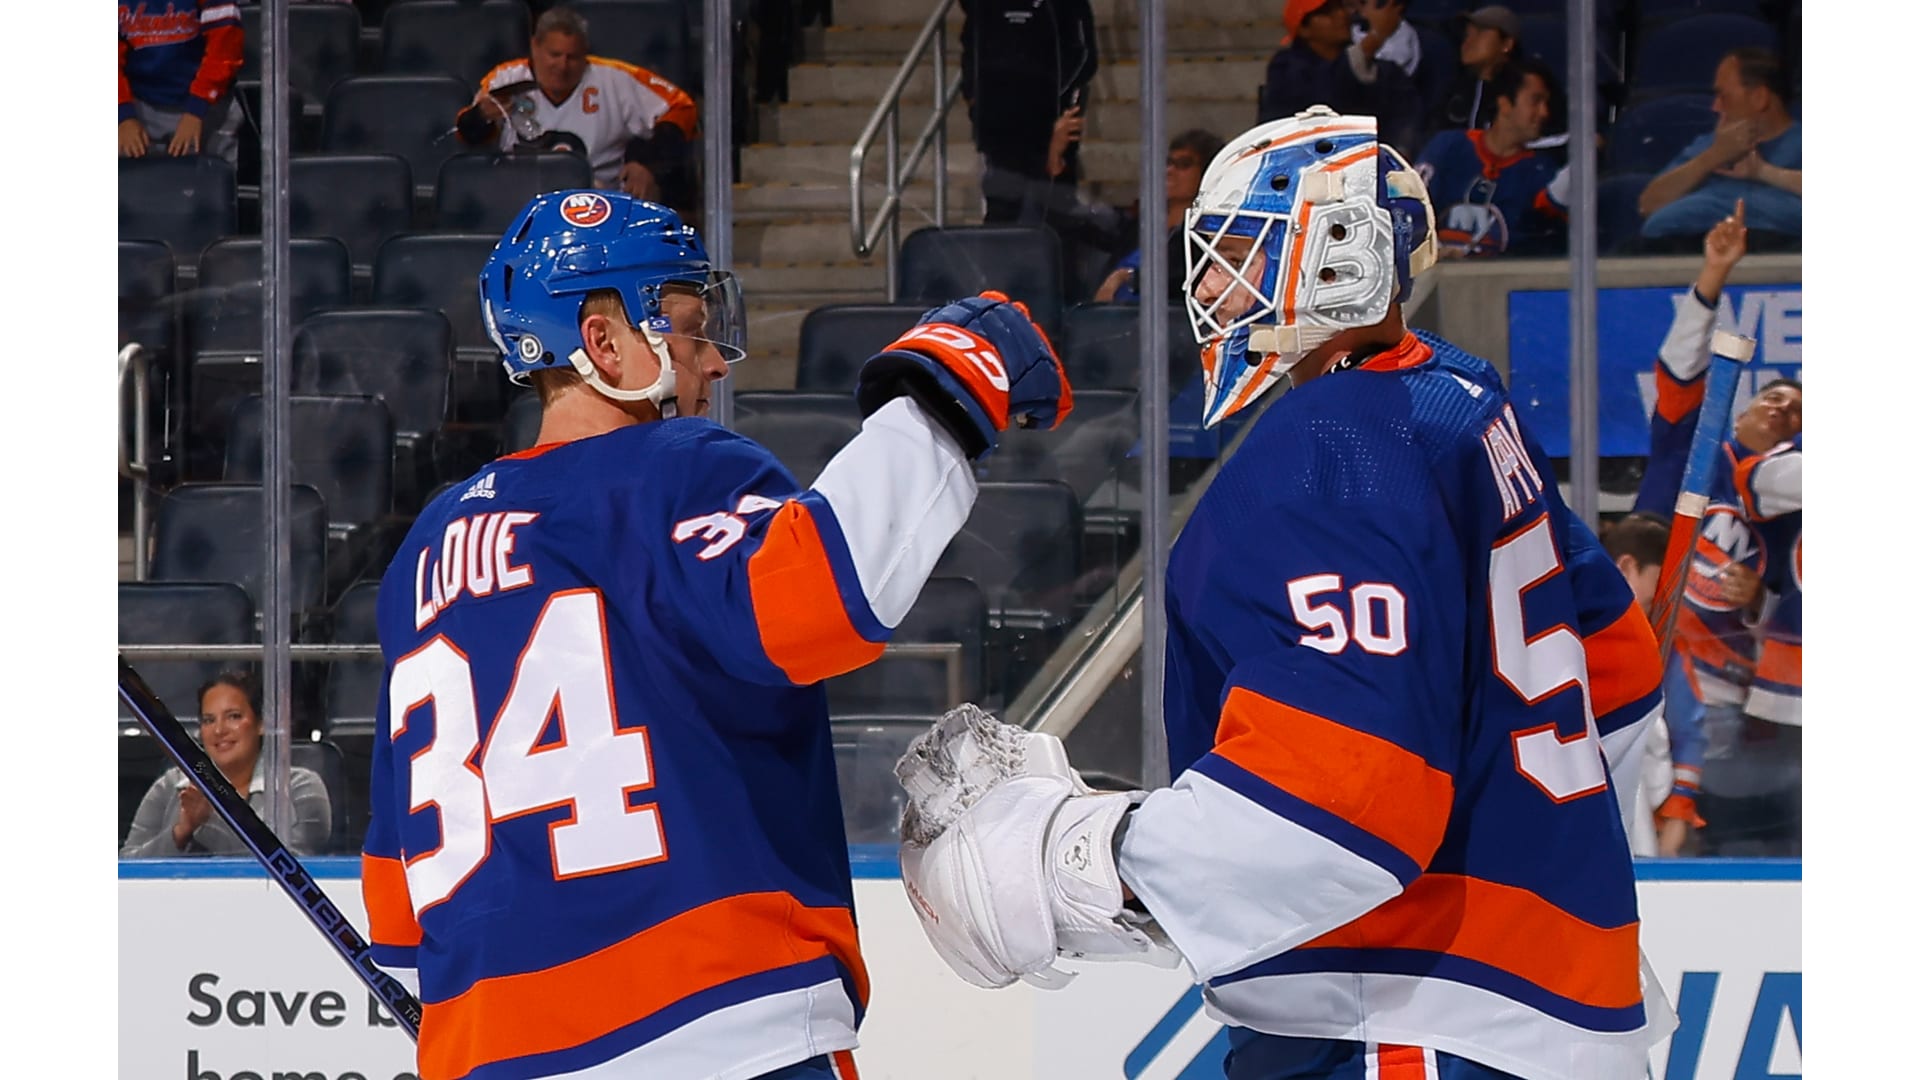 Flyers vs. Islanders Preview: We're back, baby